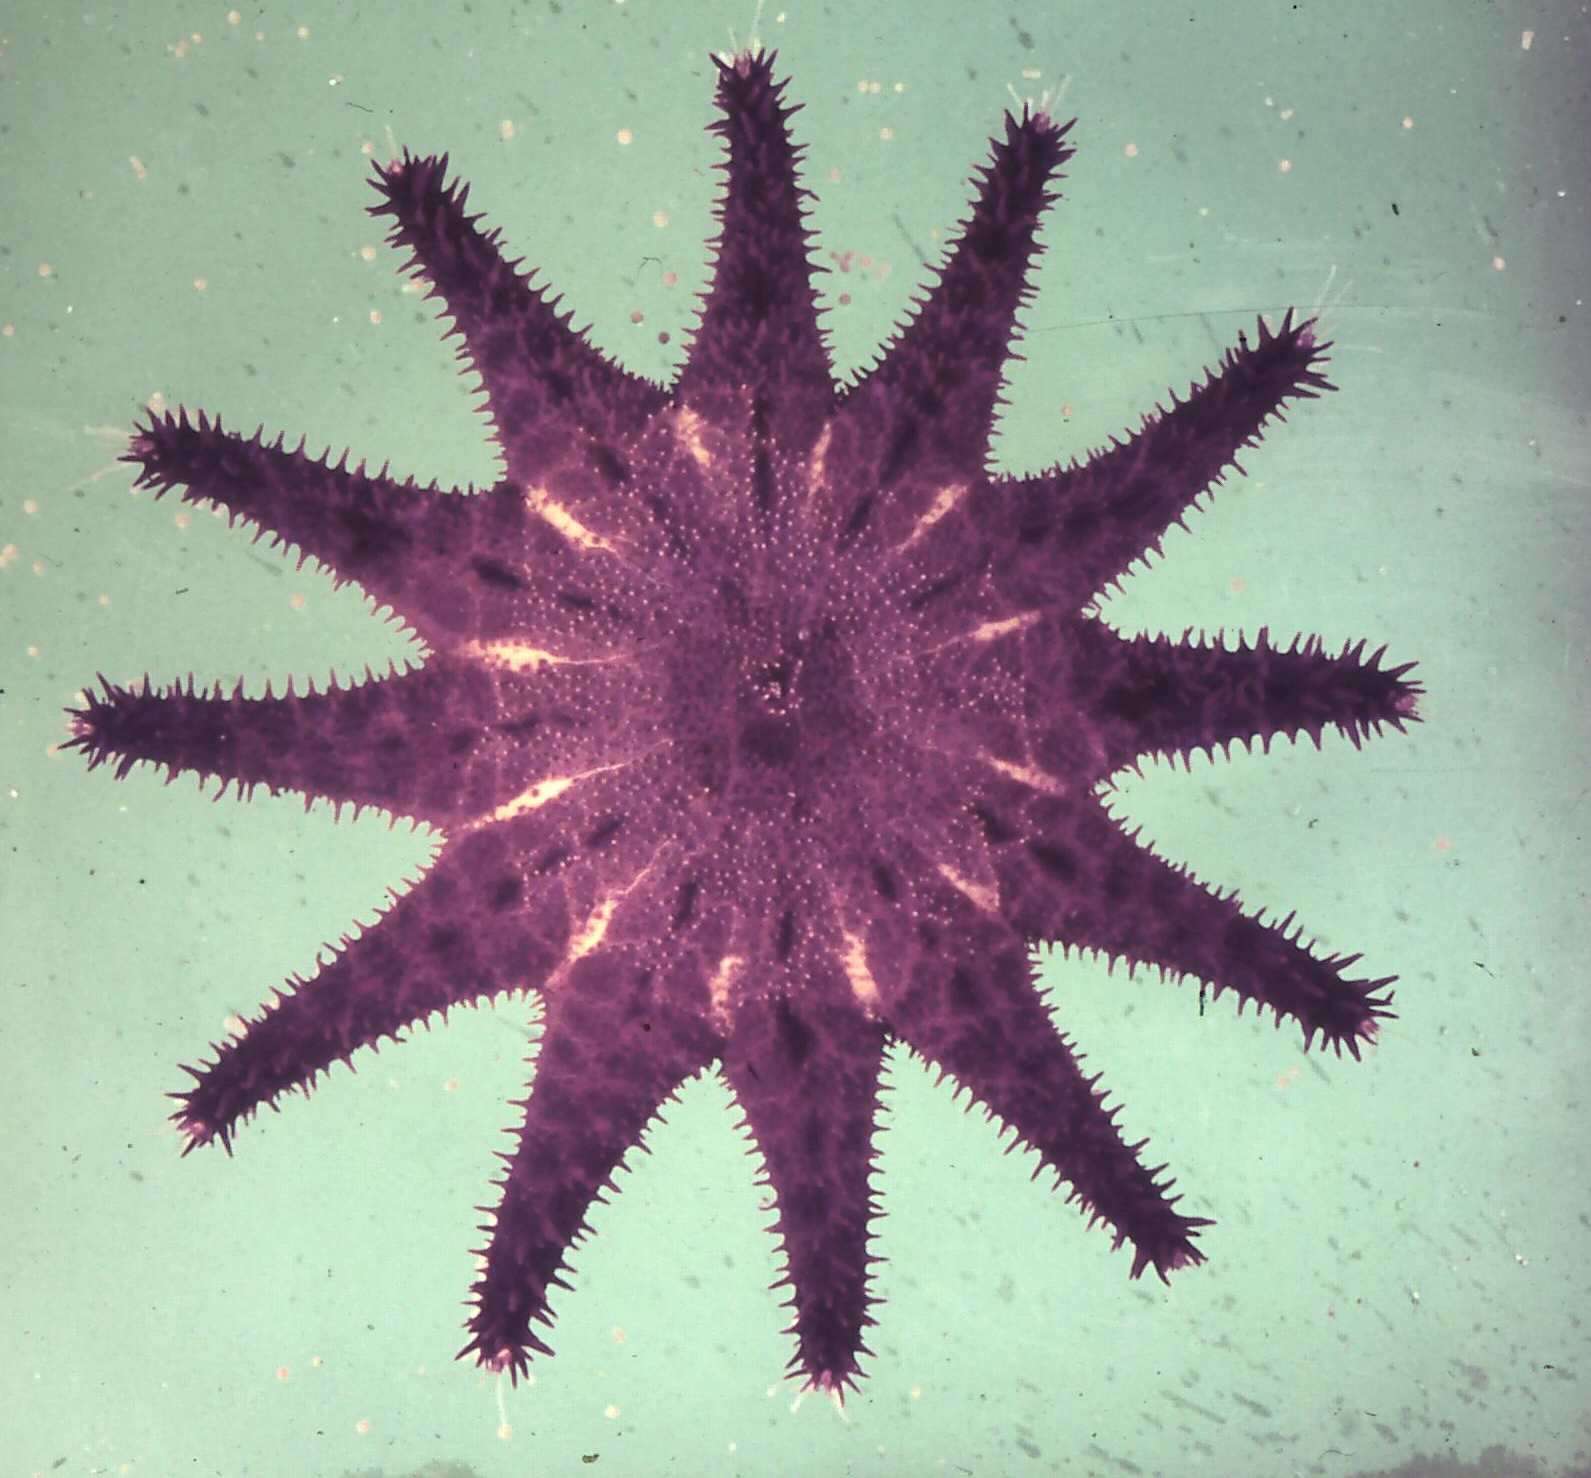 Image of crown-of-thorns starfish